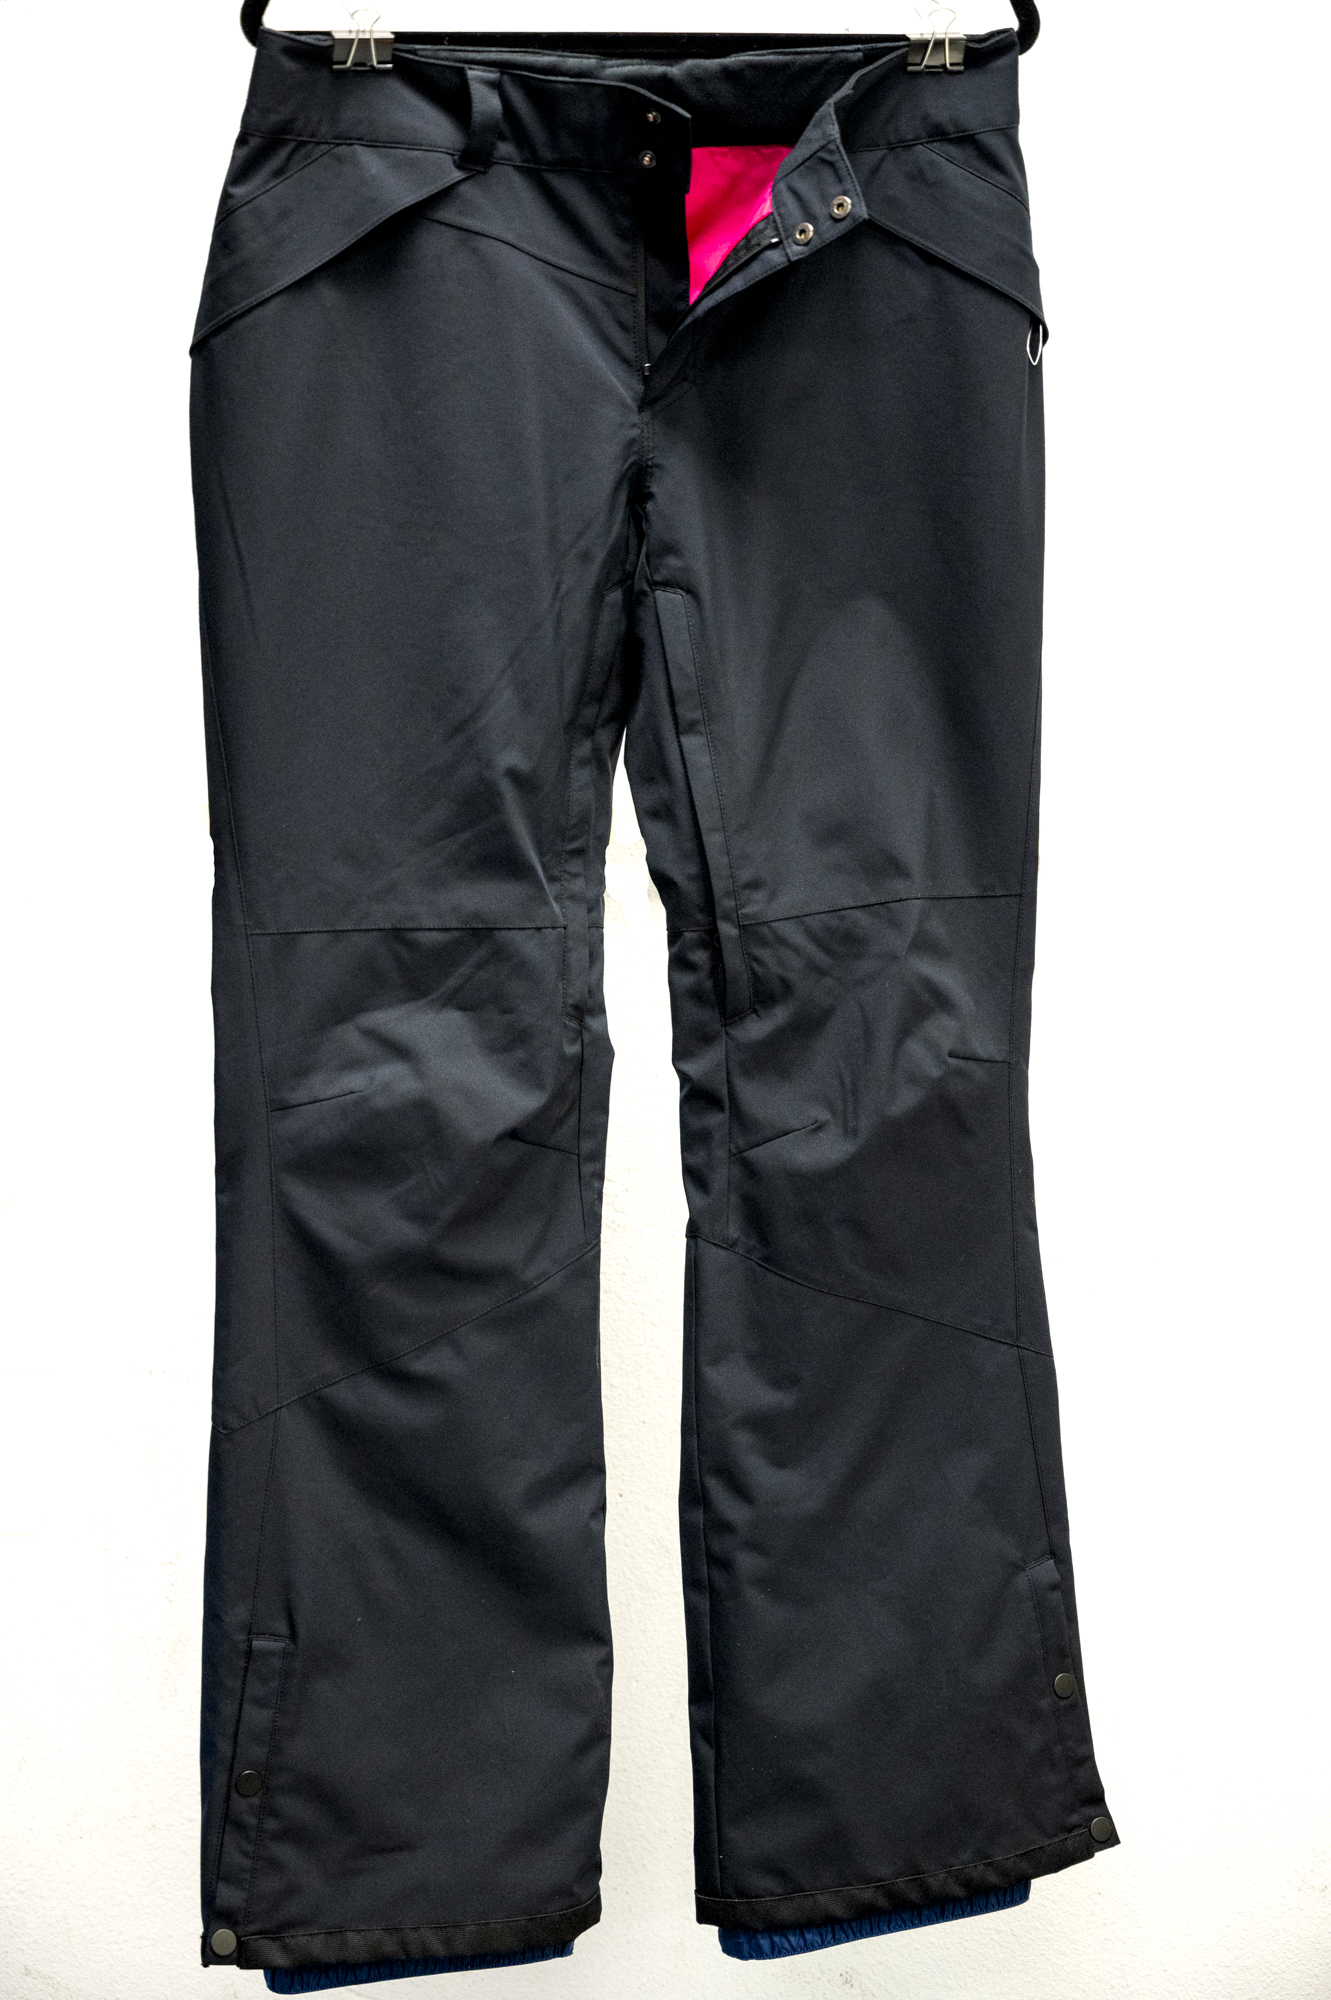 Spyder Prototype Womens Ski Pants - Large - Boulder Mountain Repair